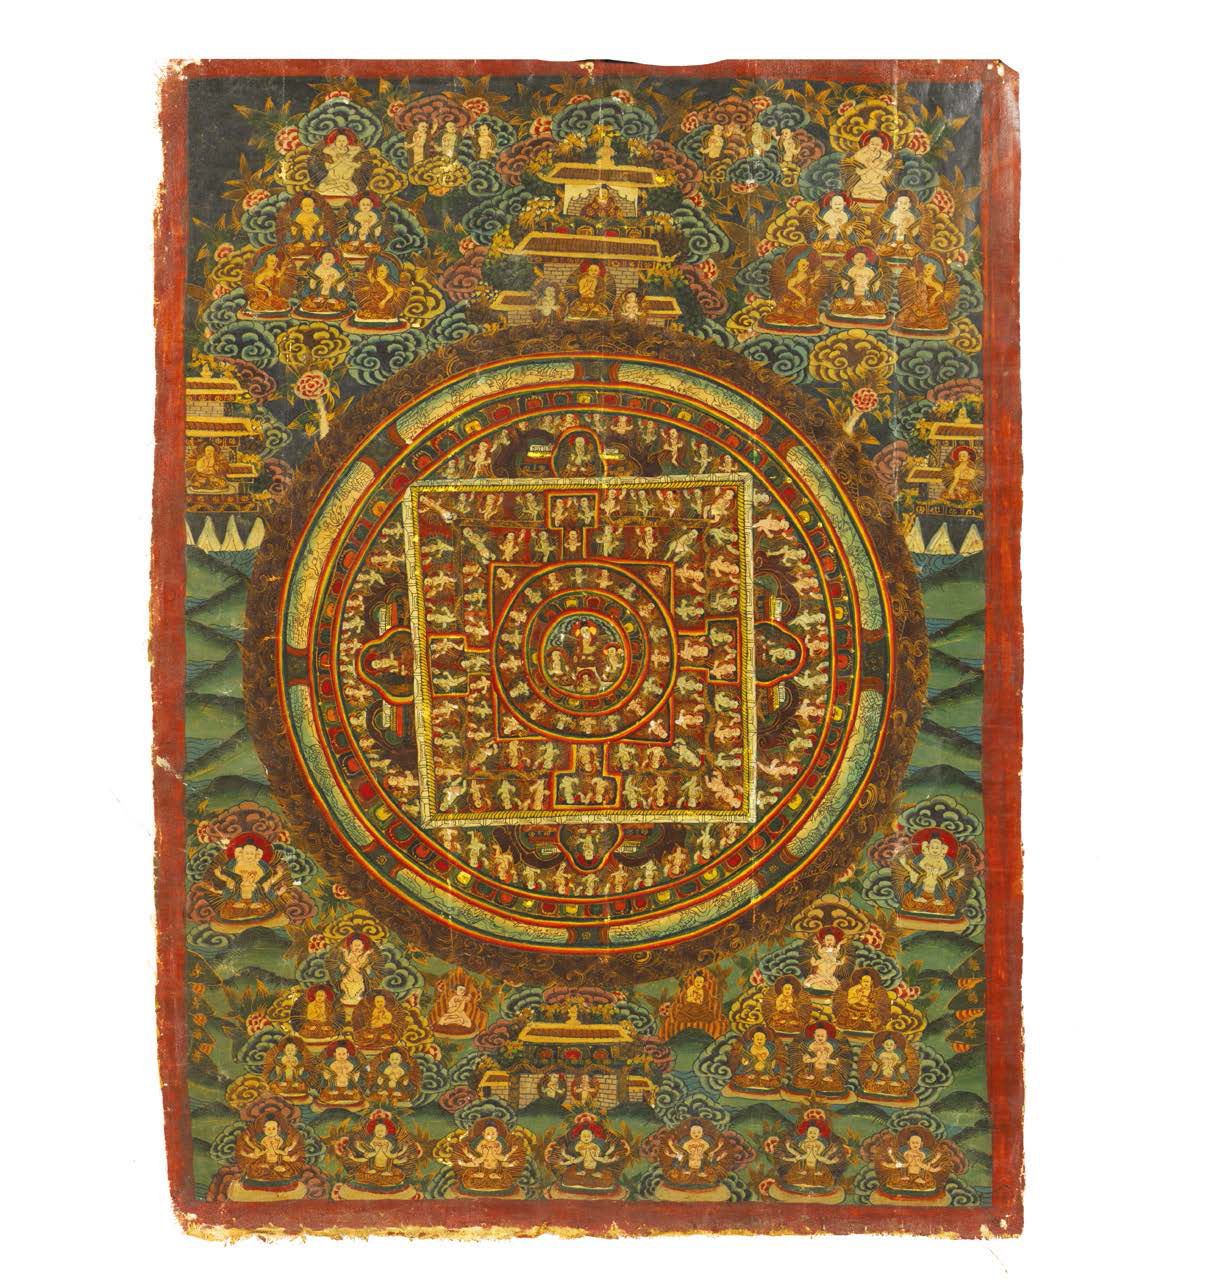 Null 
多色颜料画布，西藏，20世纪。
高_45厘米，宽_33.3厘米
出处：法国艺术市场，2013年